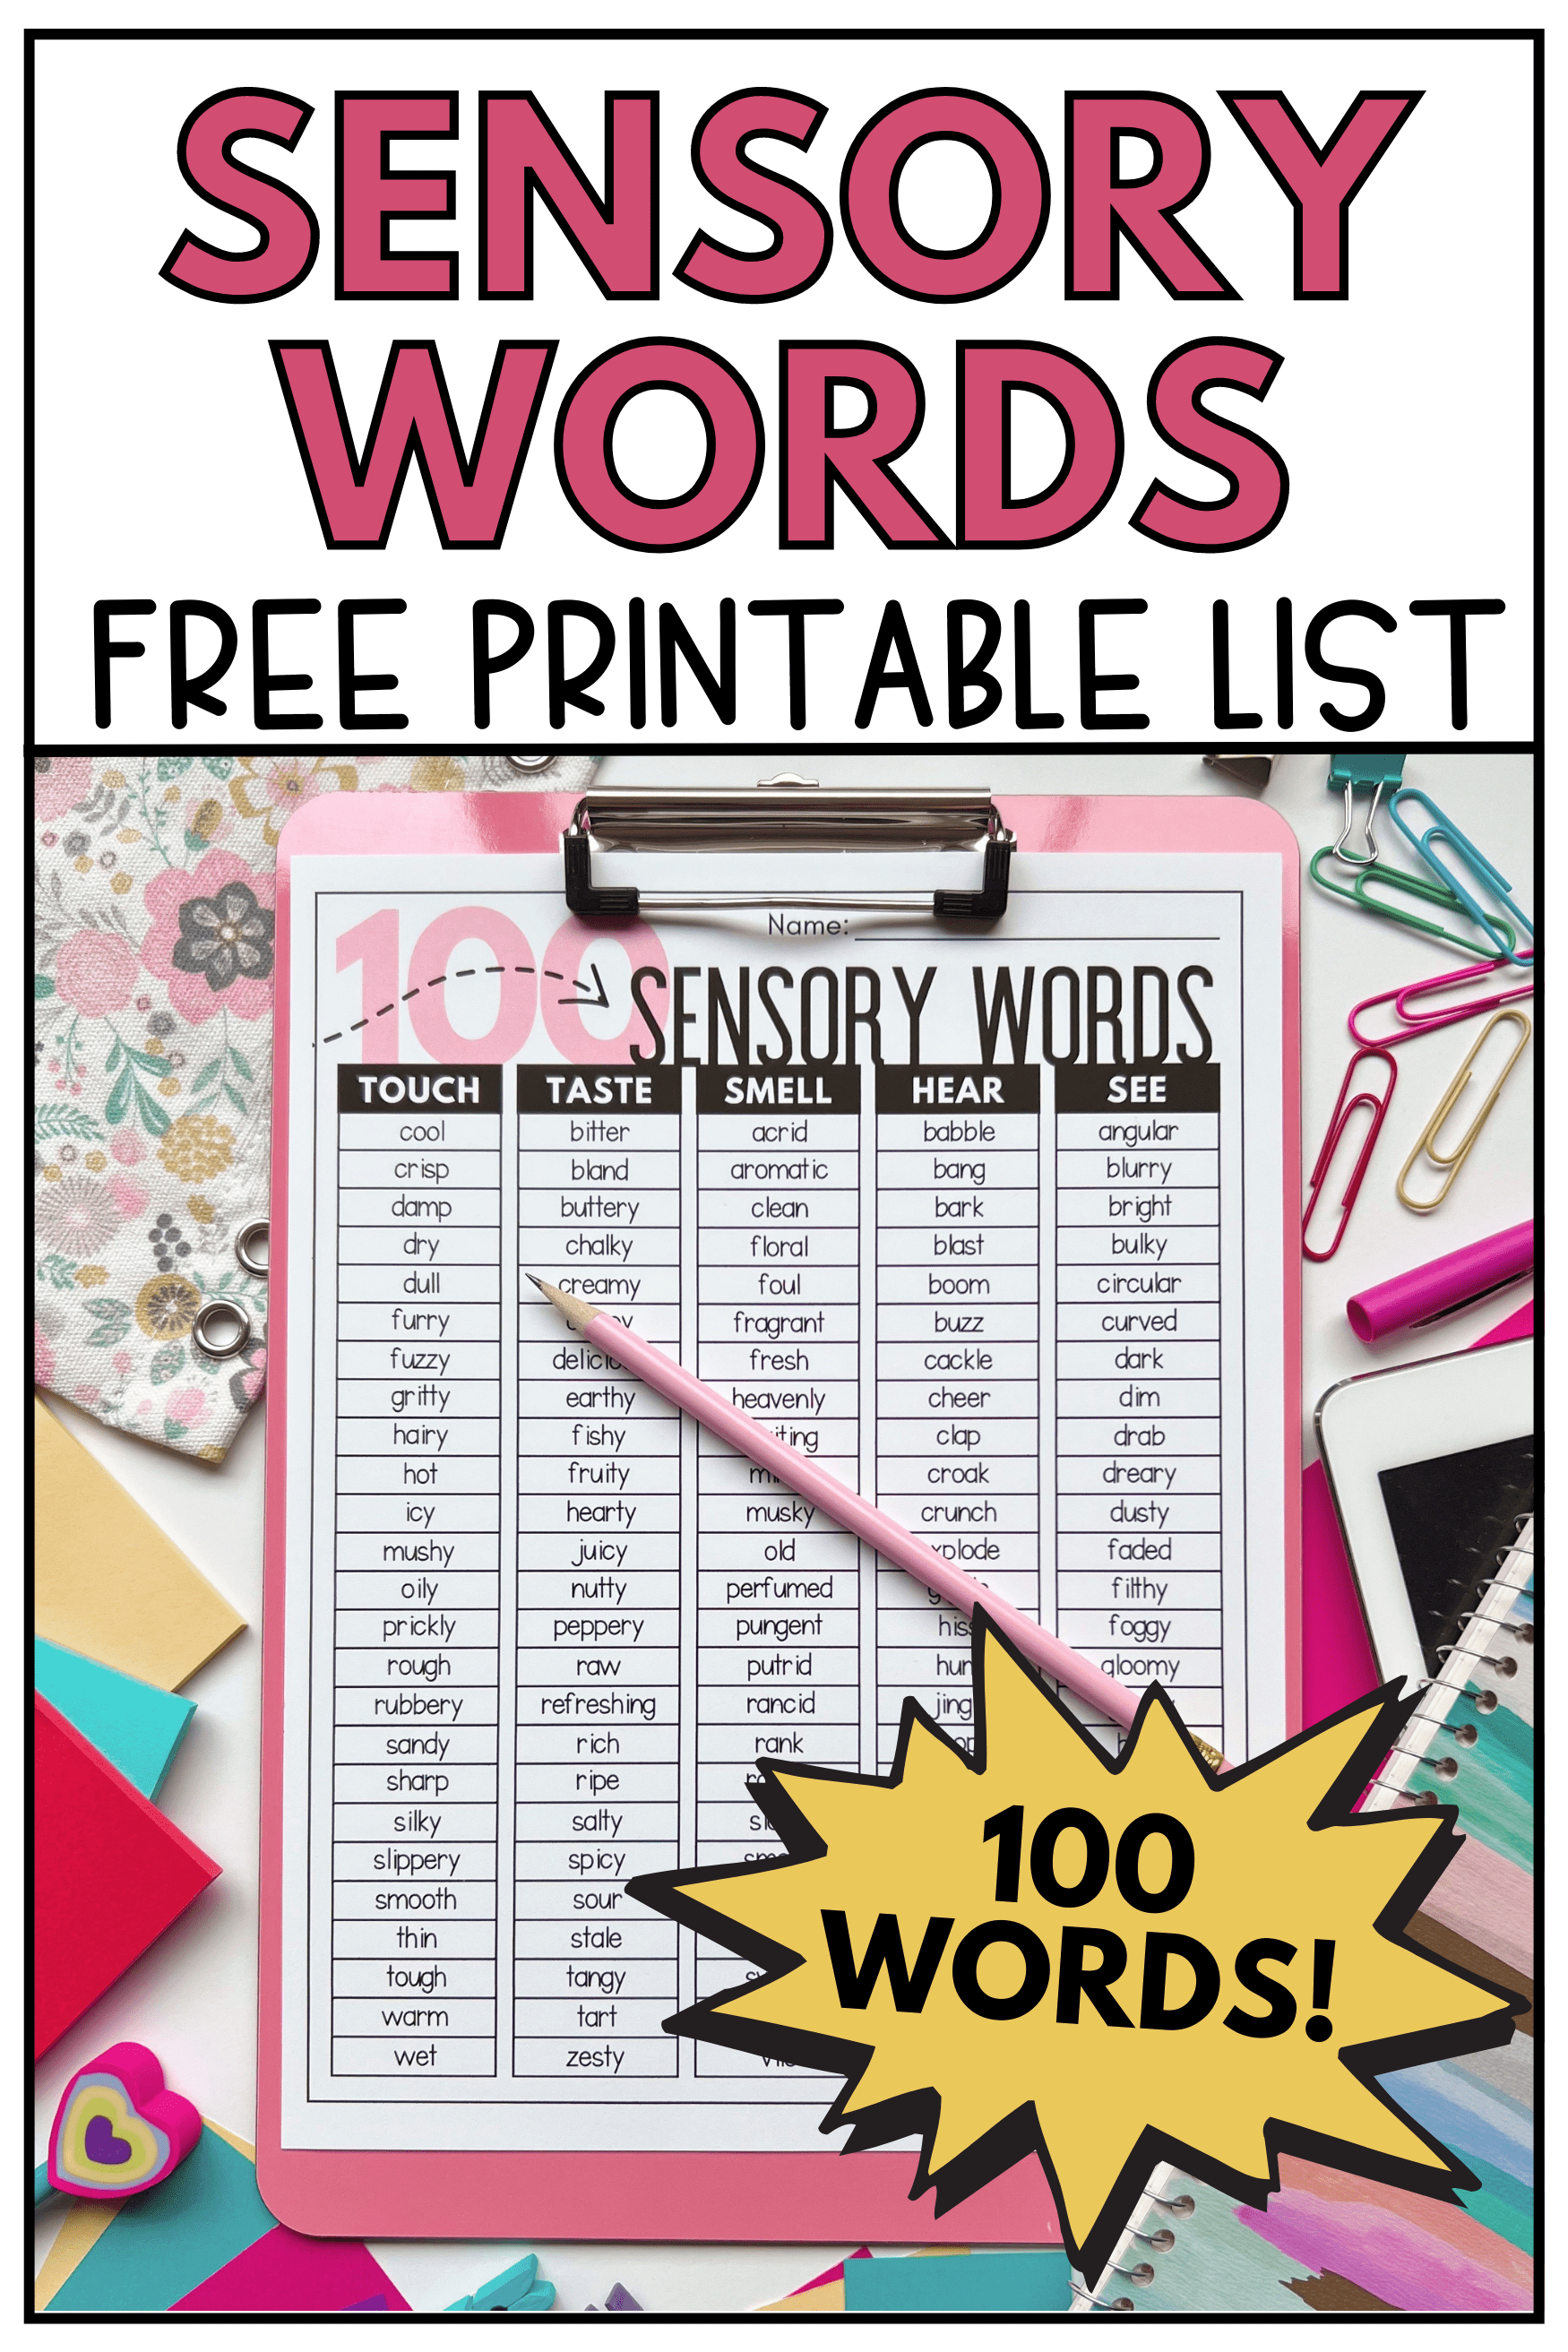 Free Printable PDF | 100 Sensory Words List